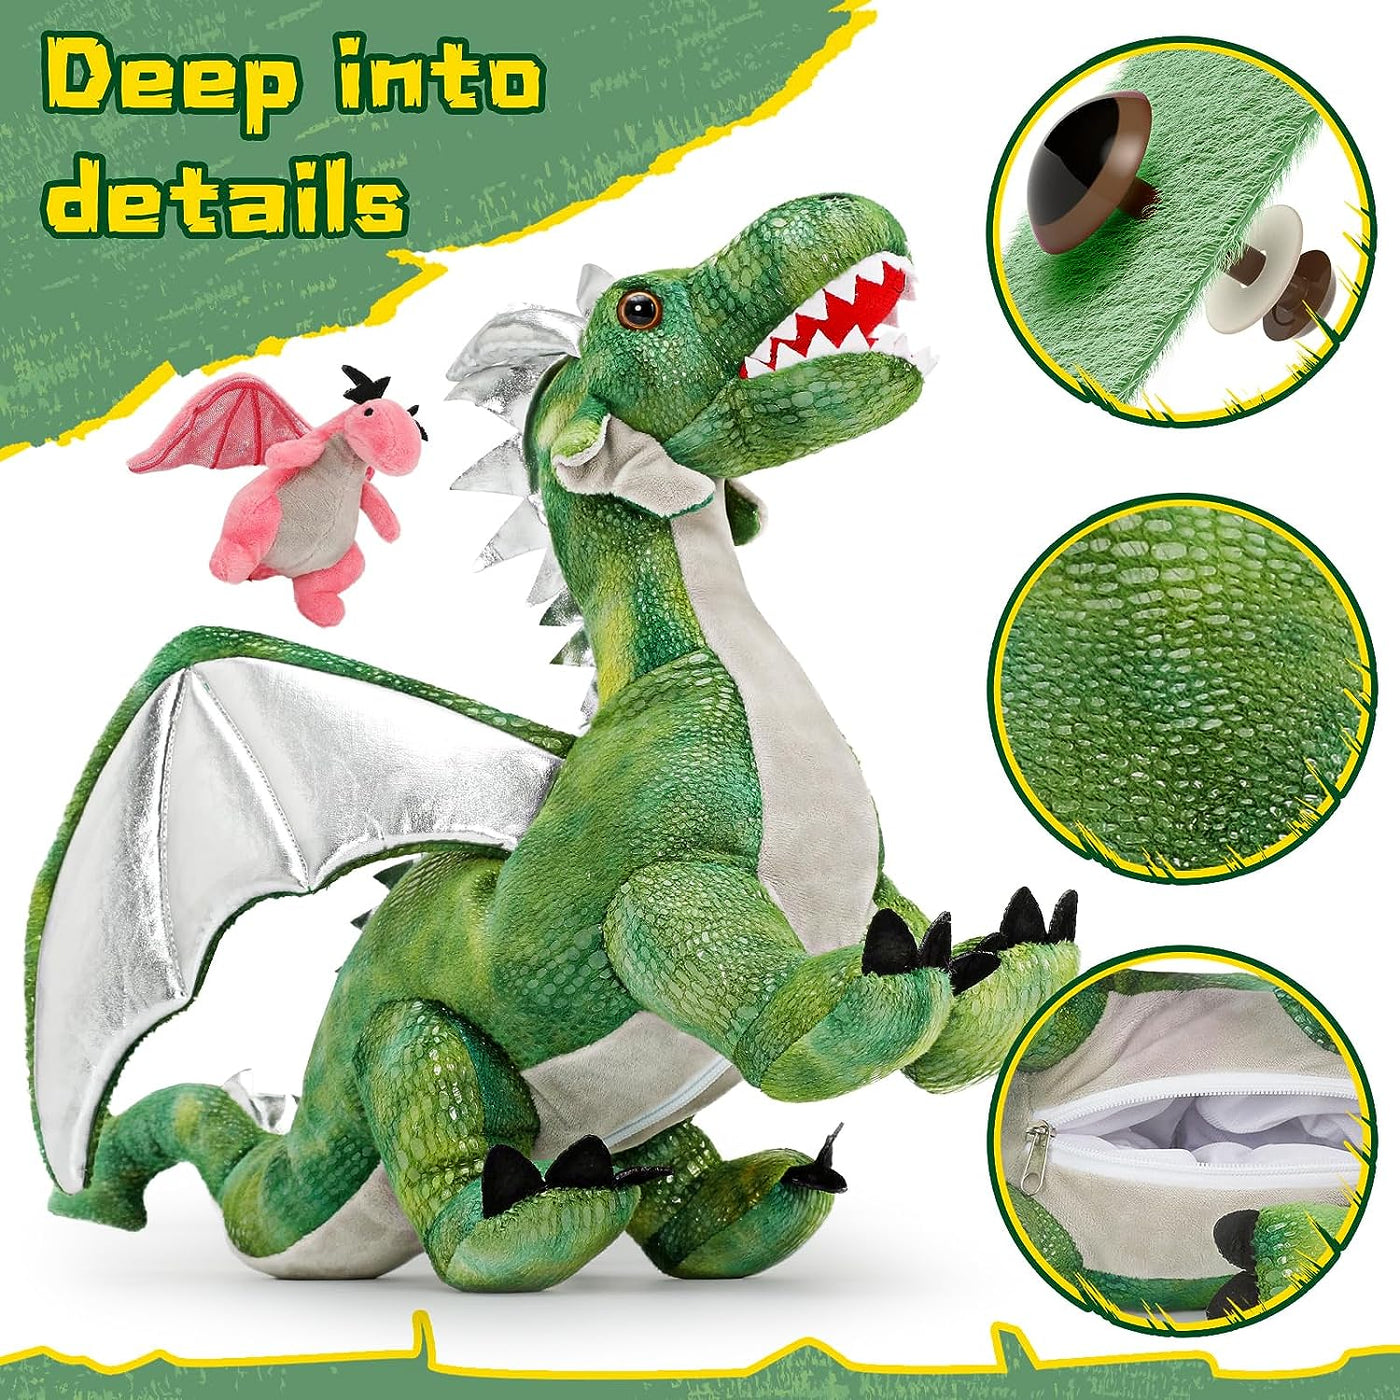 7 Pcs Dragon Plush Stuffed Animal,21'' Large Stuffed Dragon Plush Bulk